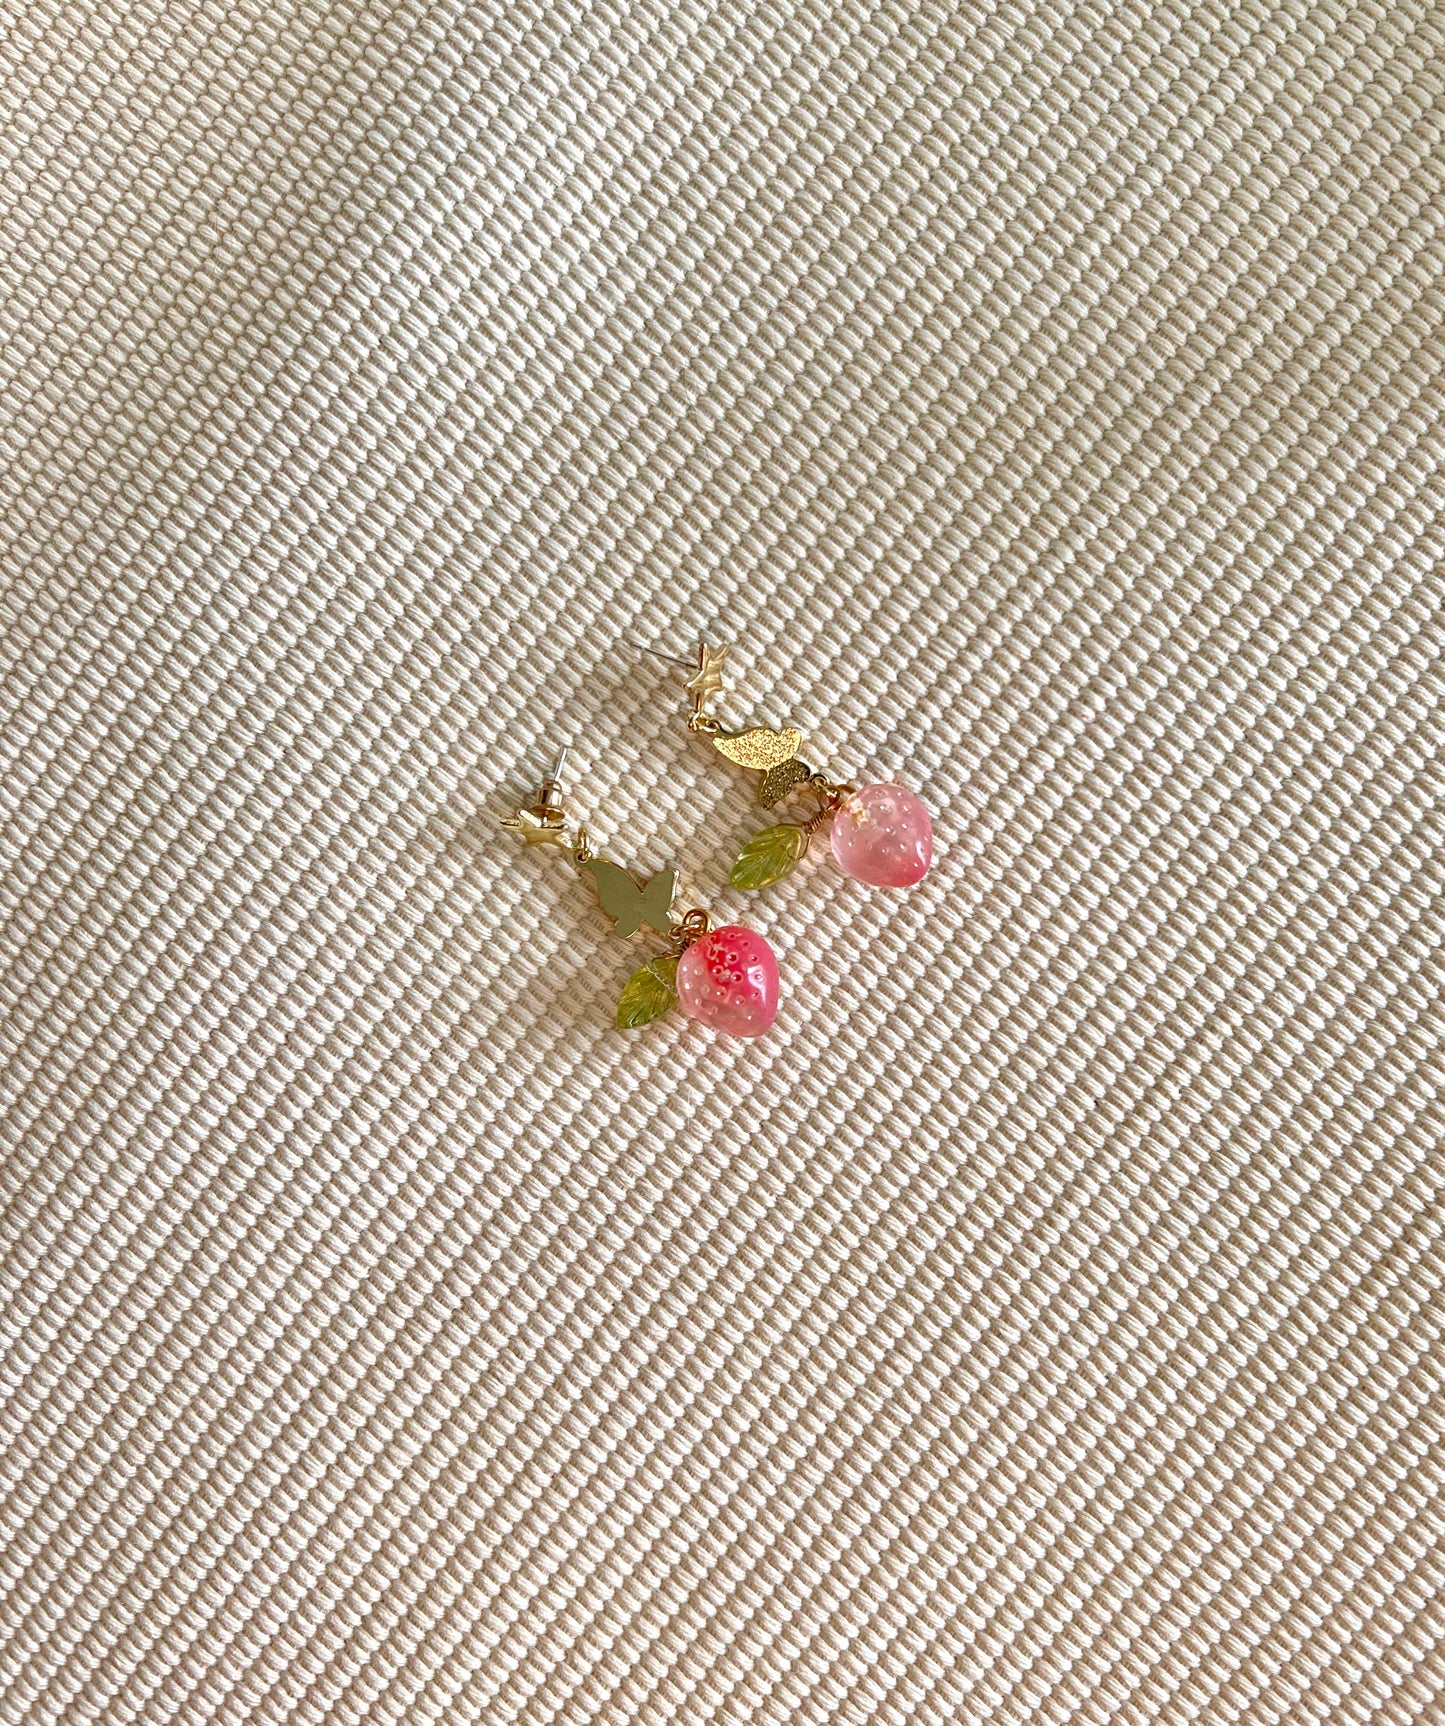 Glass Bead Strawberry Dangle Earrings